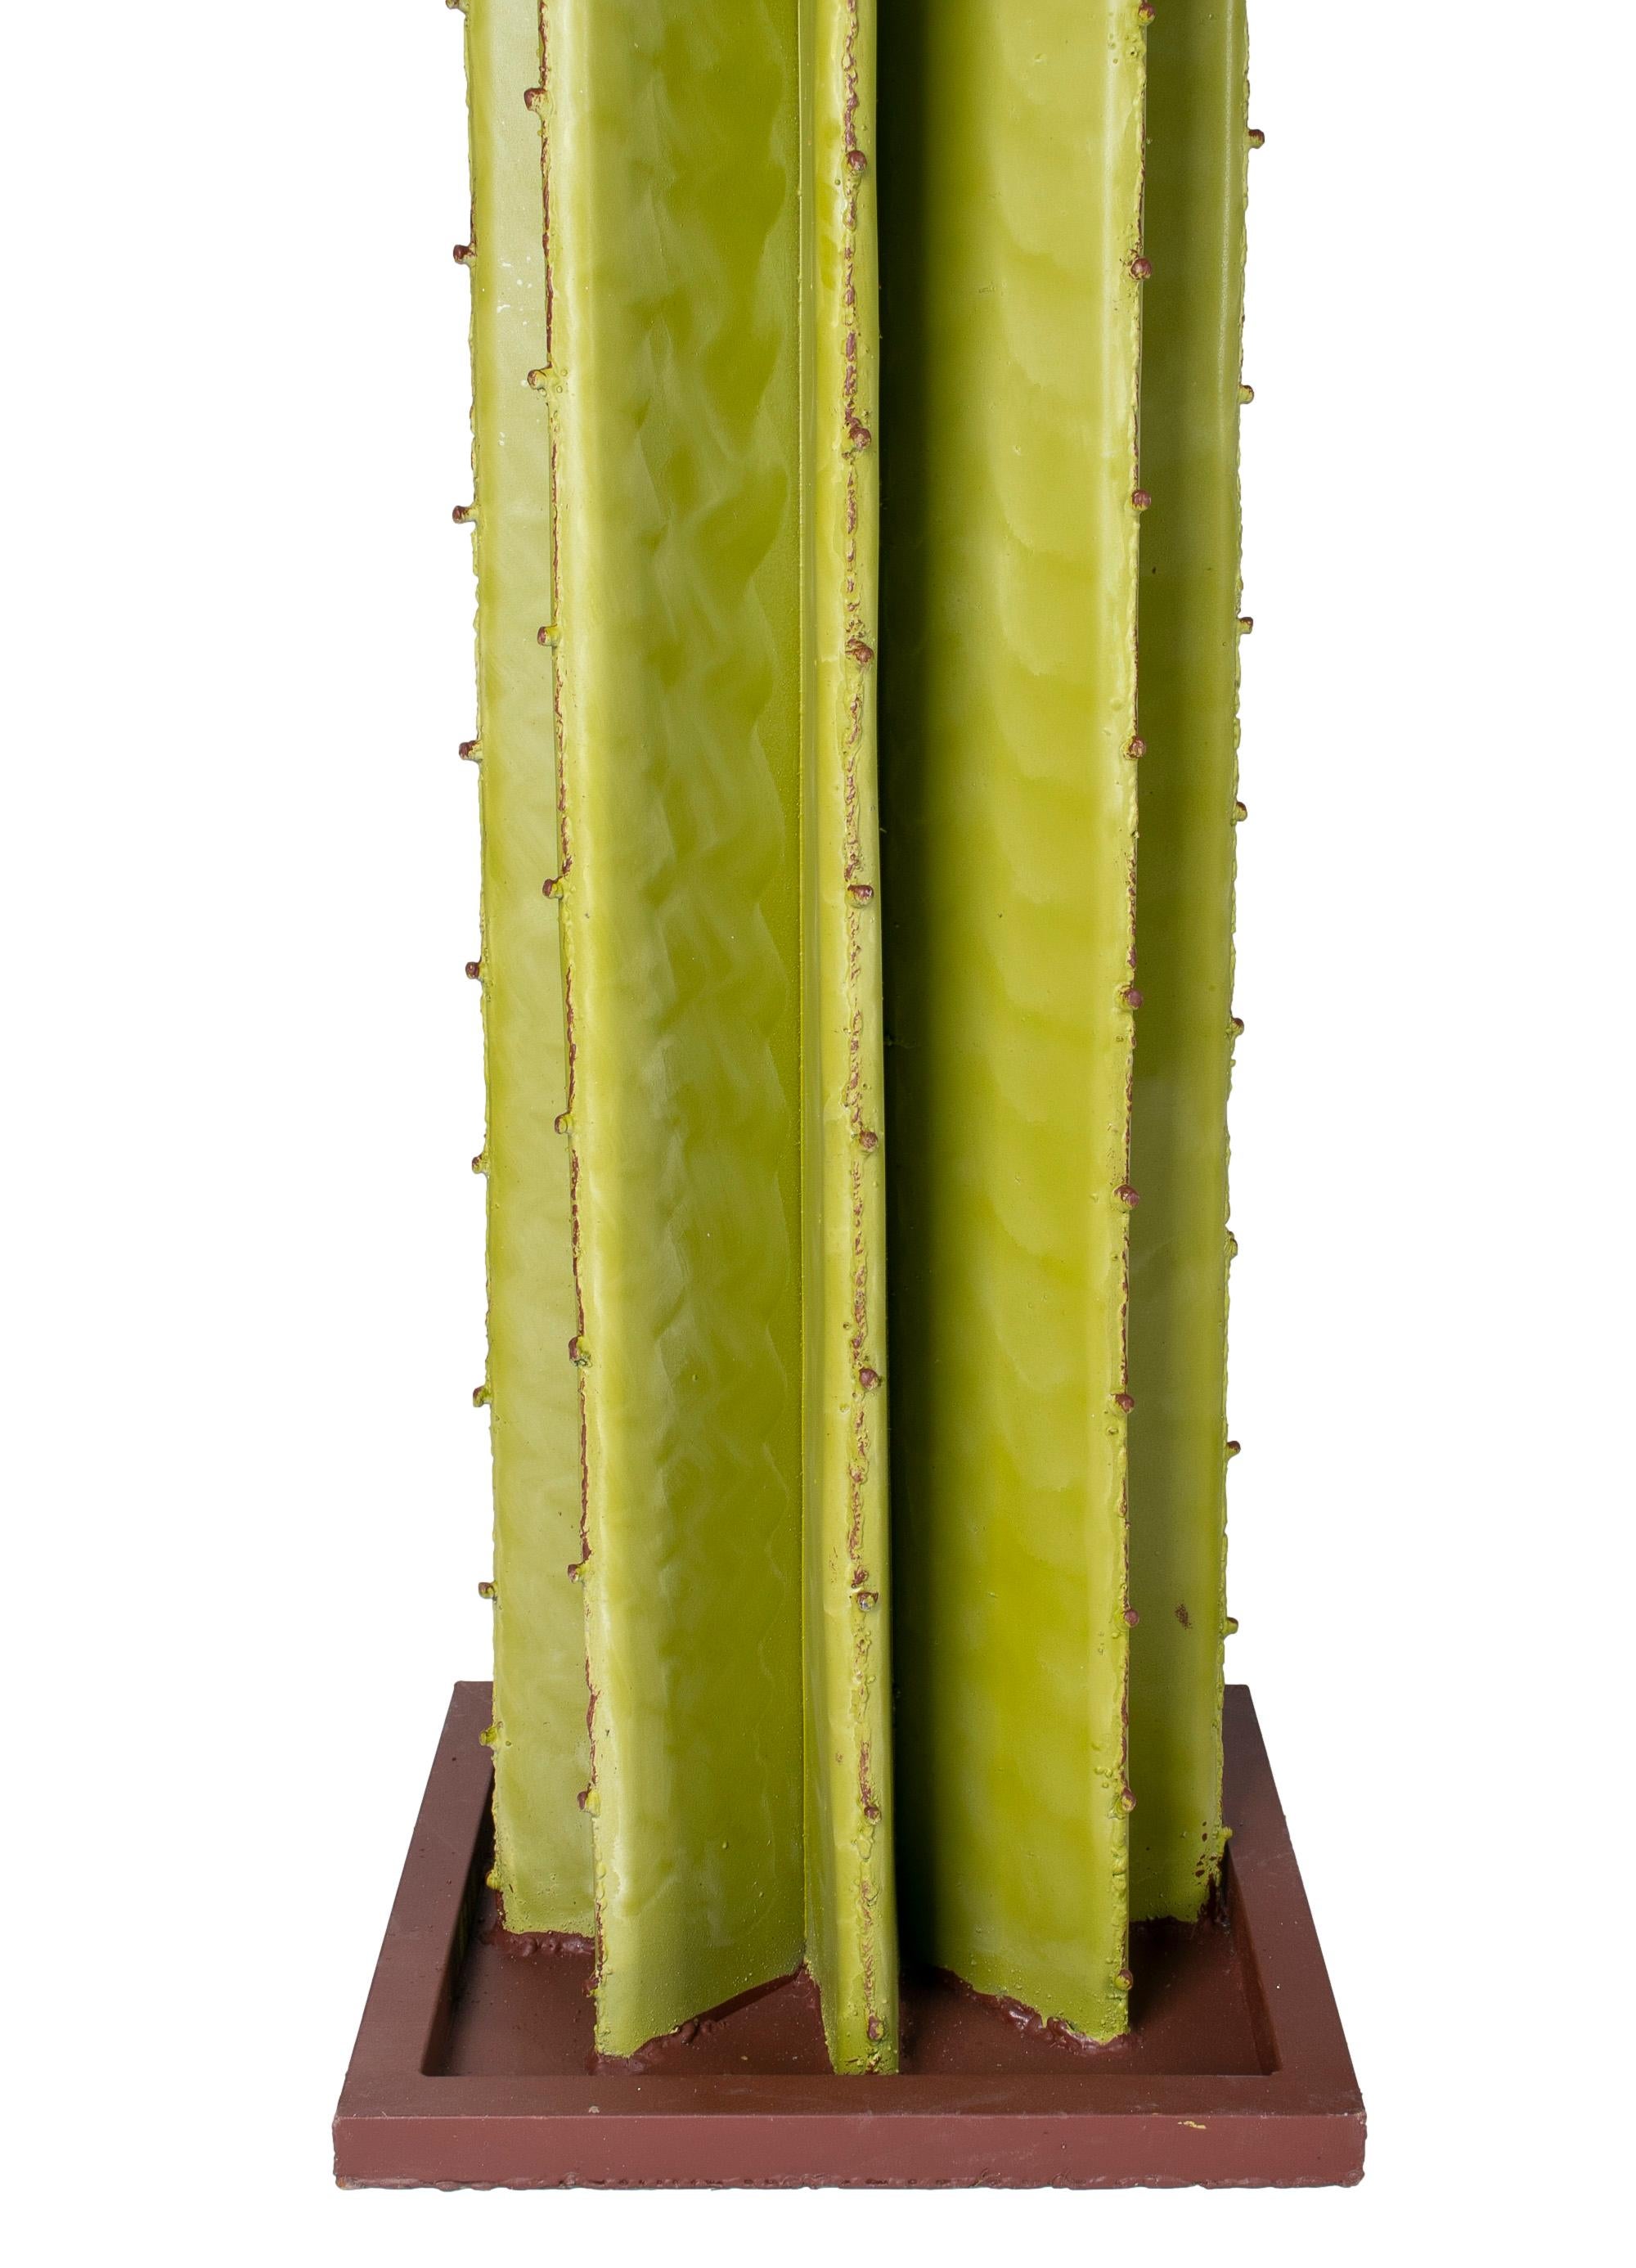 iron cactus photos